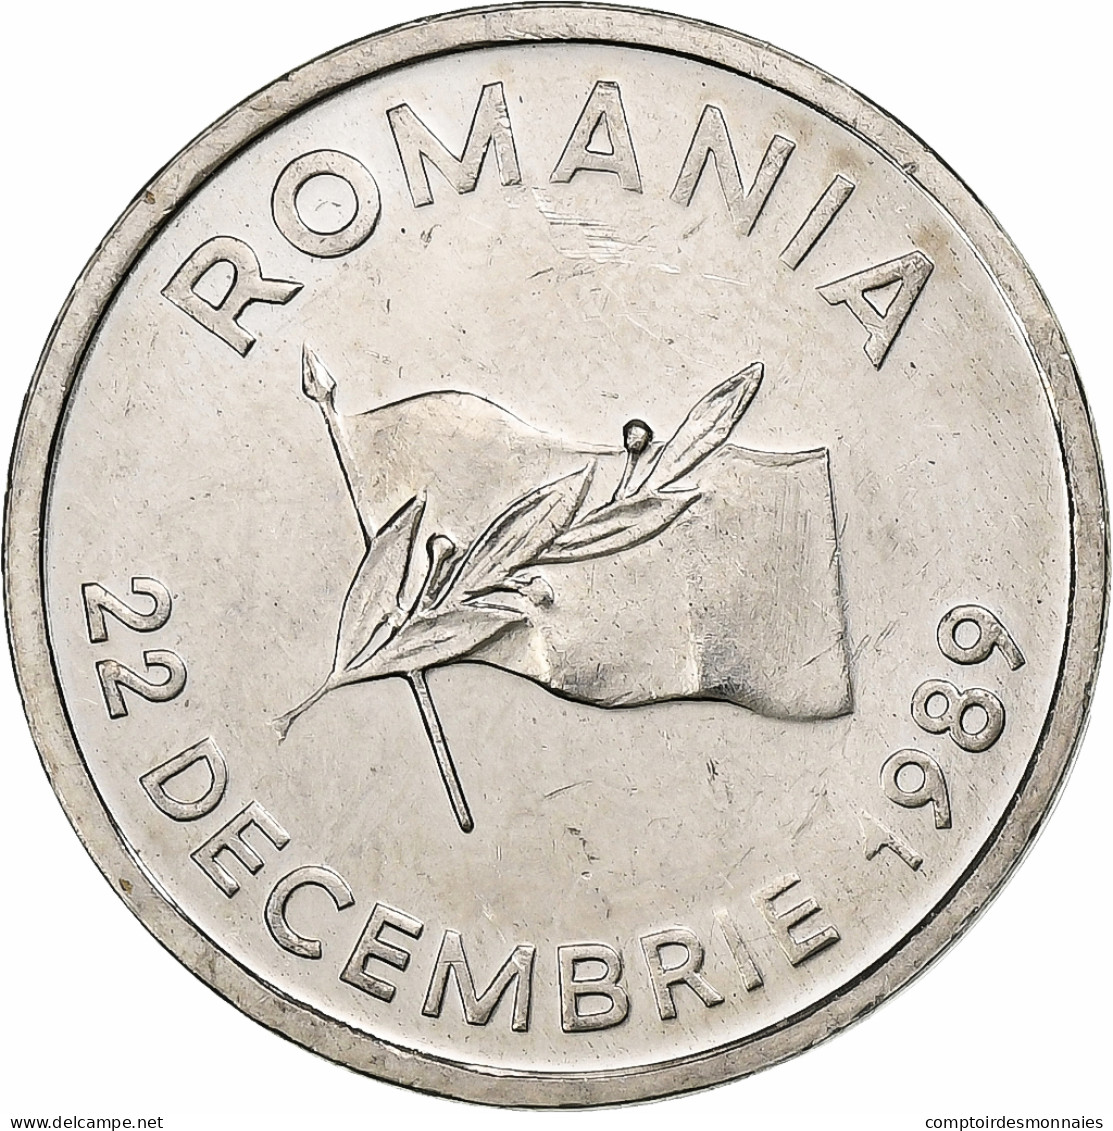 Roumanie, 10 Lei, 1992, Nickel Clad Steel, SUP, KM:108 - Romania